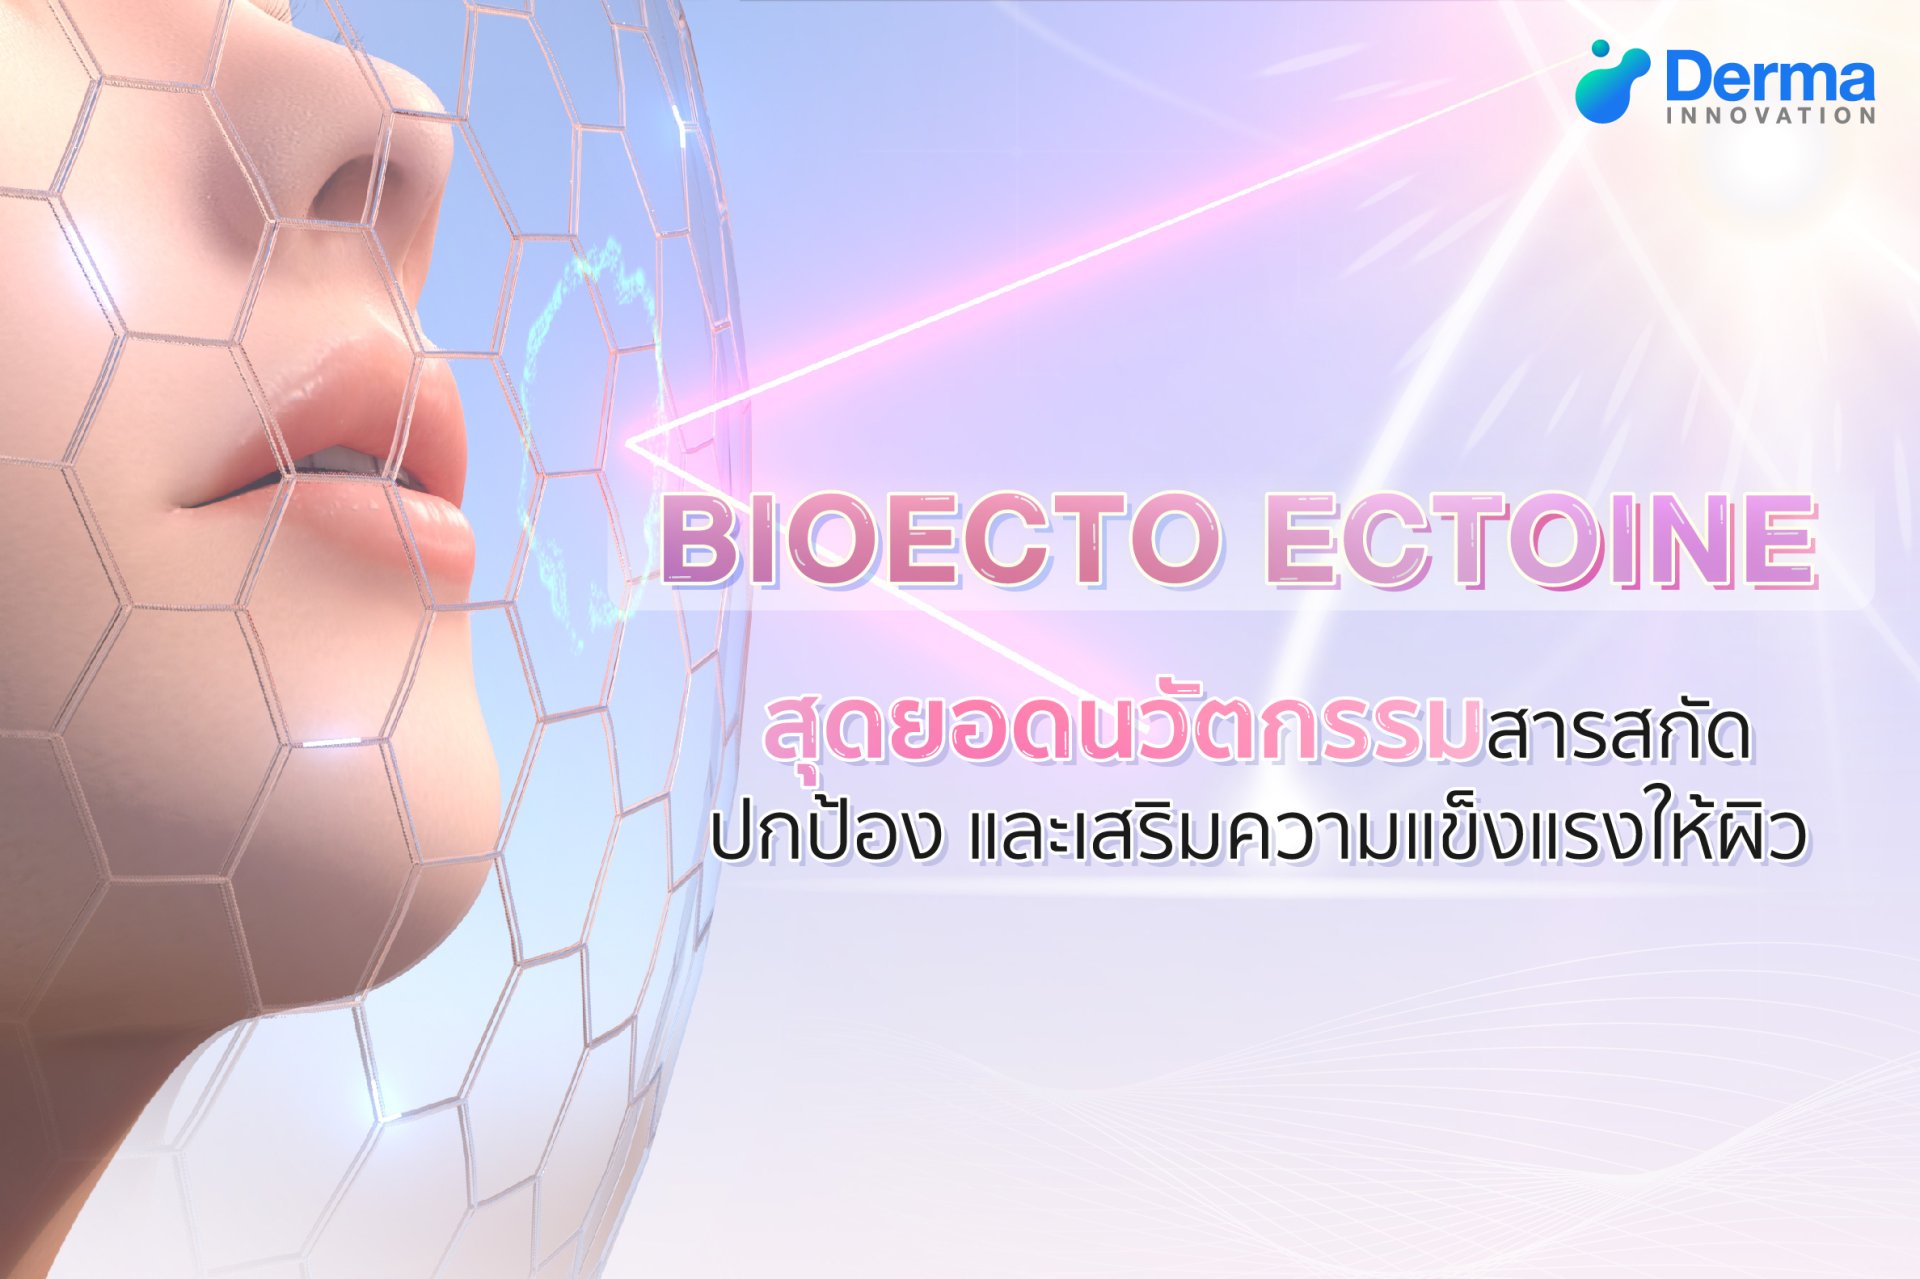 Bioecto Ectoine is an innovative skin enhancing extract.